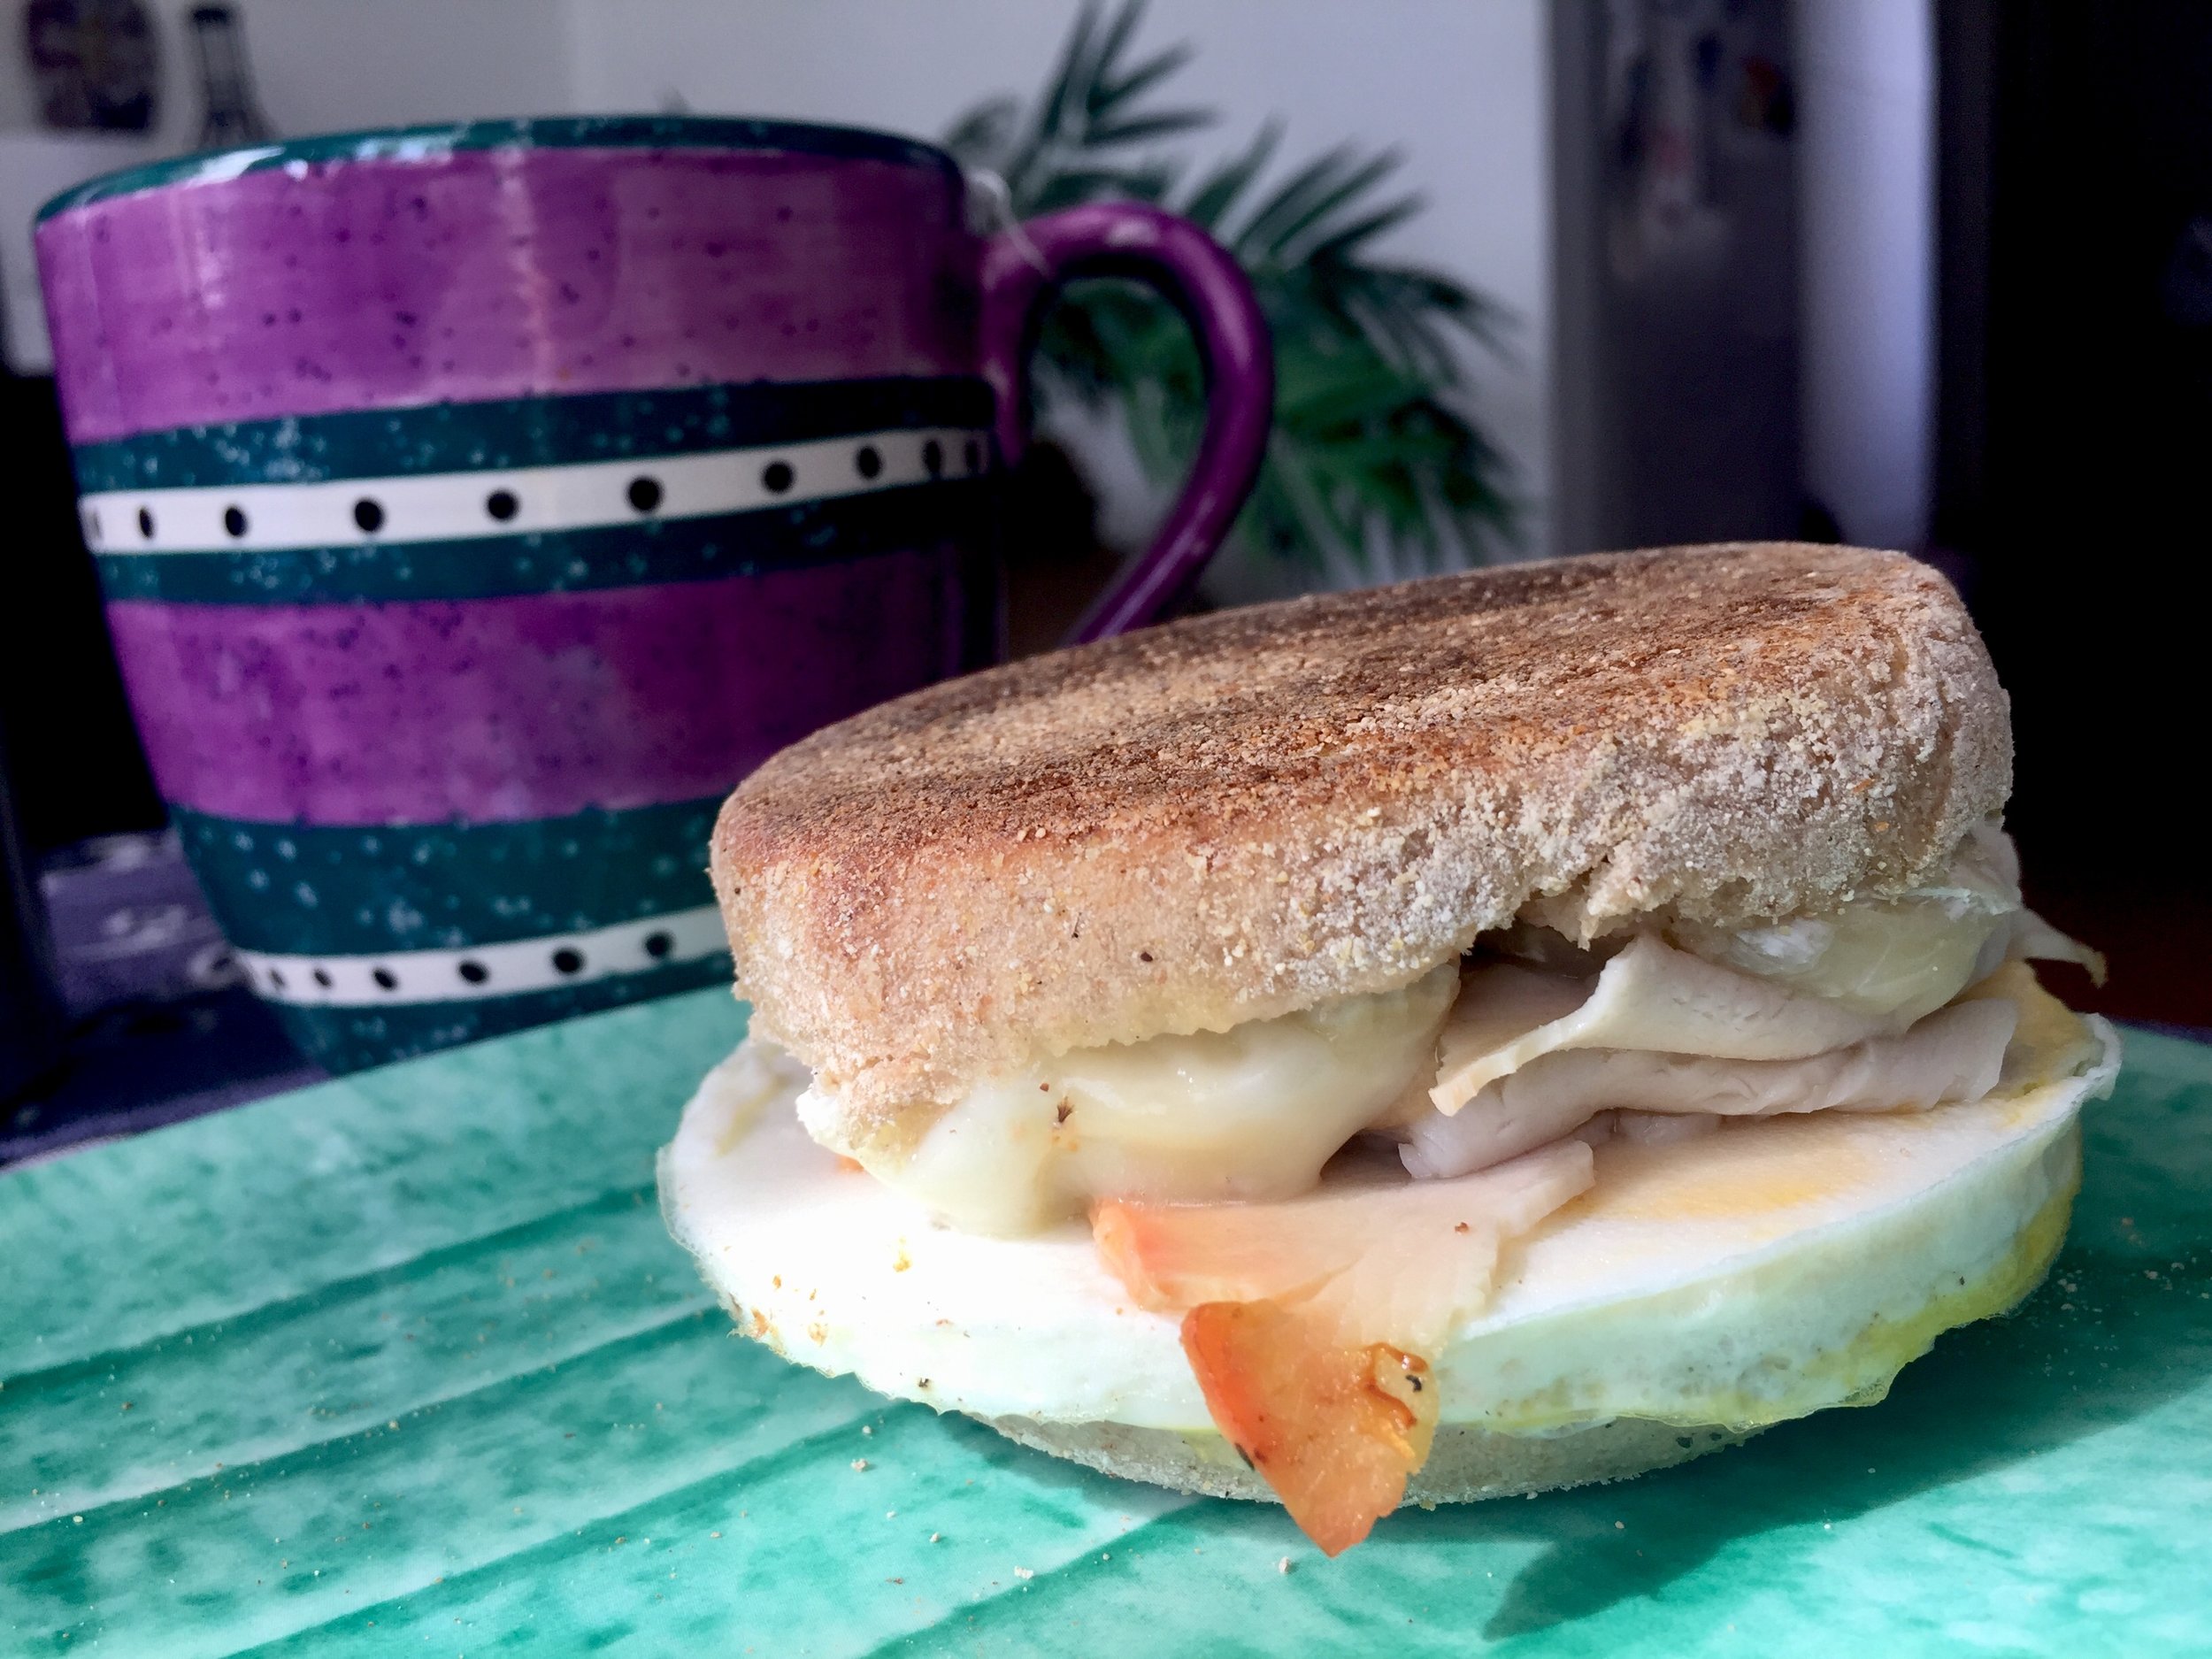 This Hamilton Beach breakfast sandwich maker changed my mornings